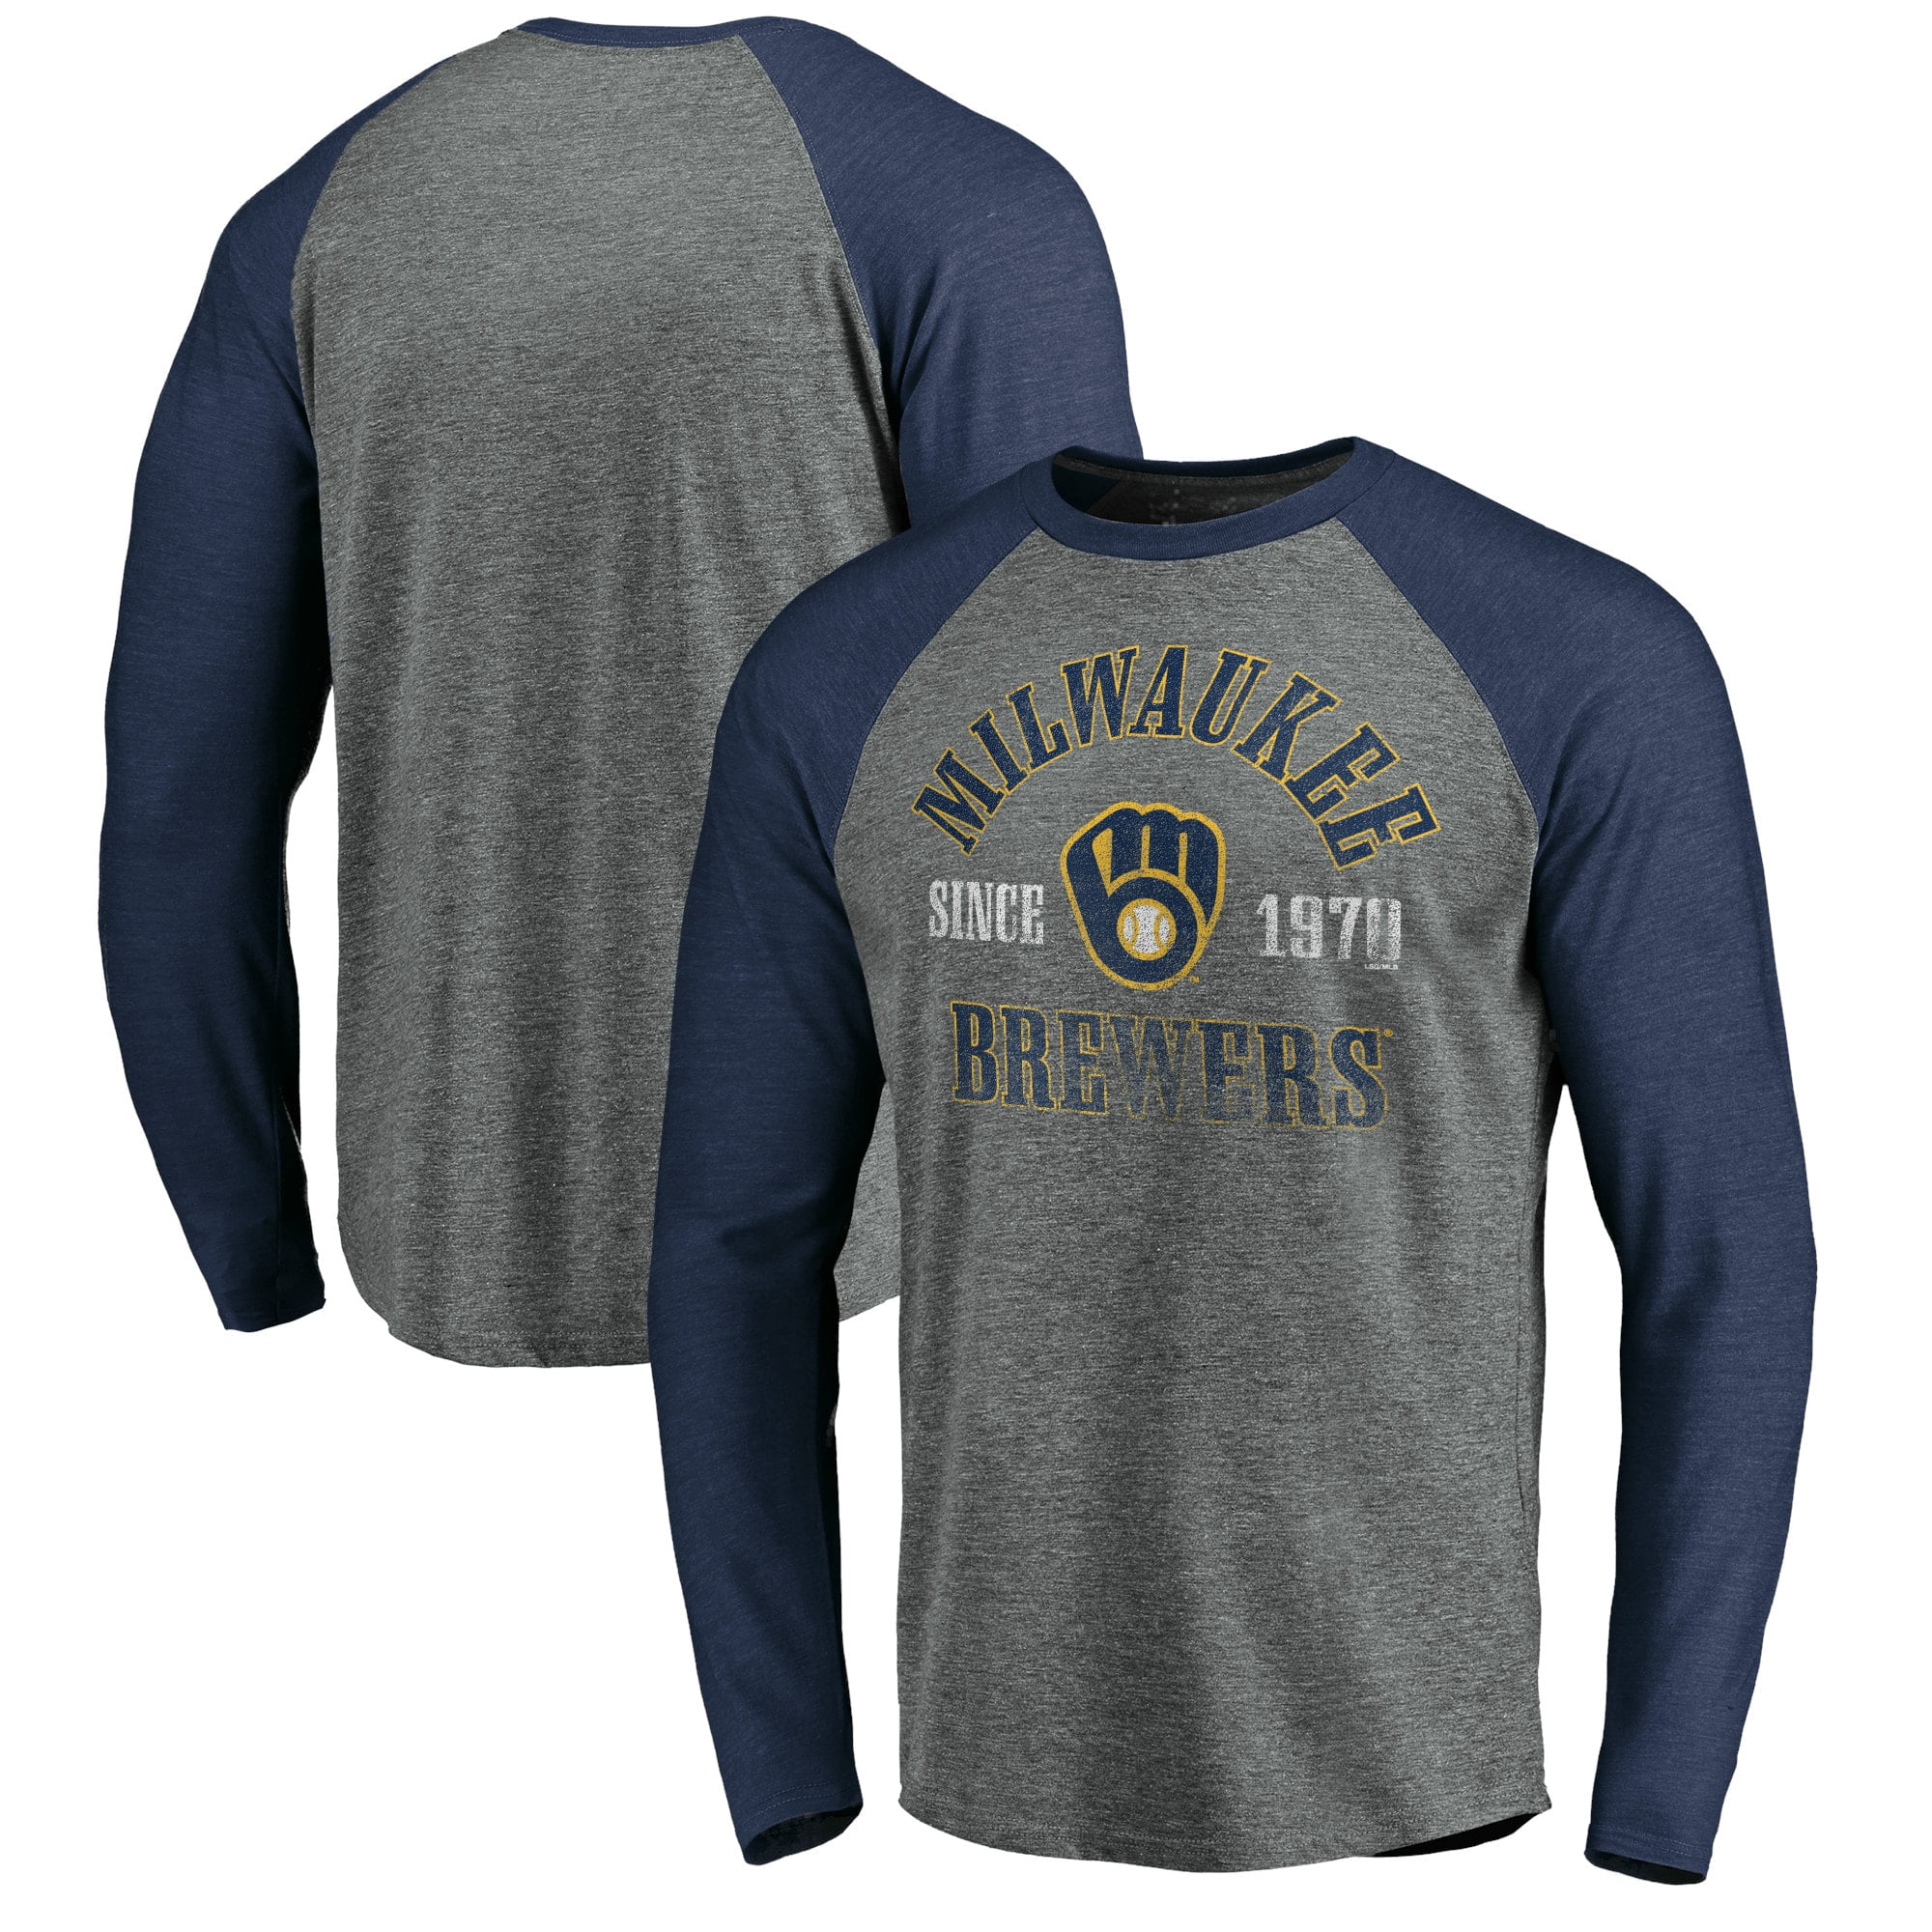 Milwaukee Brewers Fanatics Branded Team Issued Raglan Long Sleeve T-Shirt -  Heathered Gray/Heathered Navy 